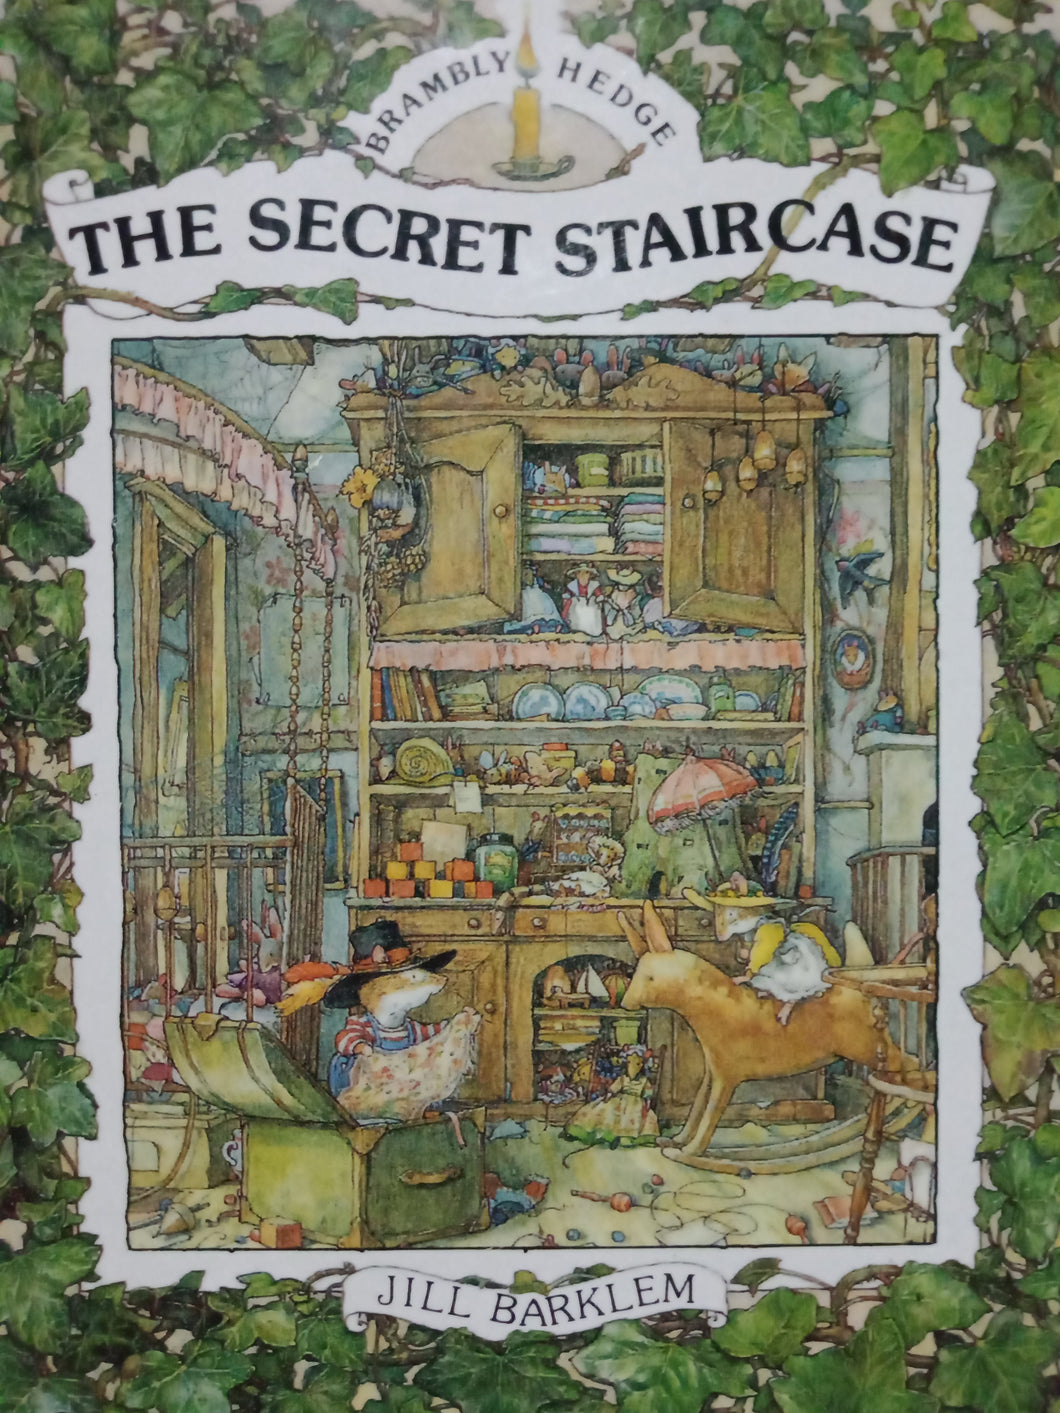 The Secret Staircase by Jill Barklem